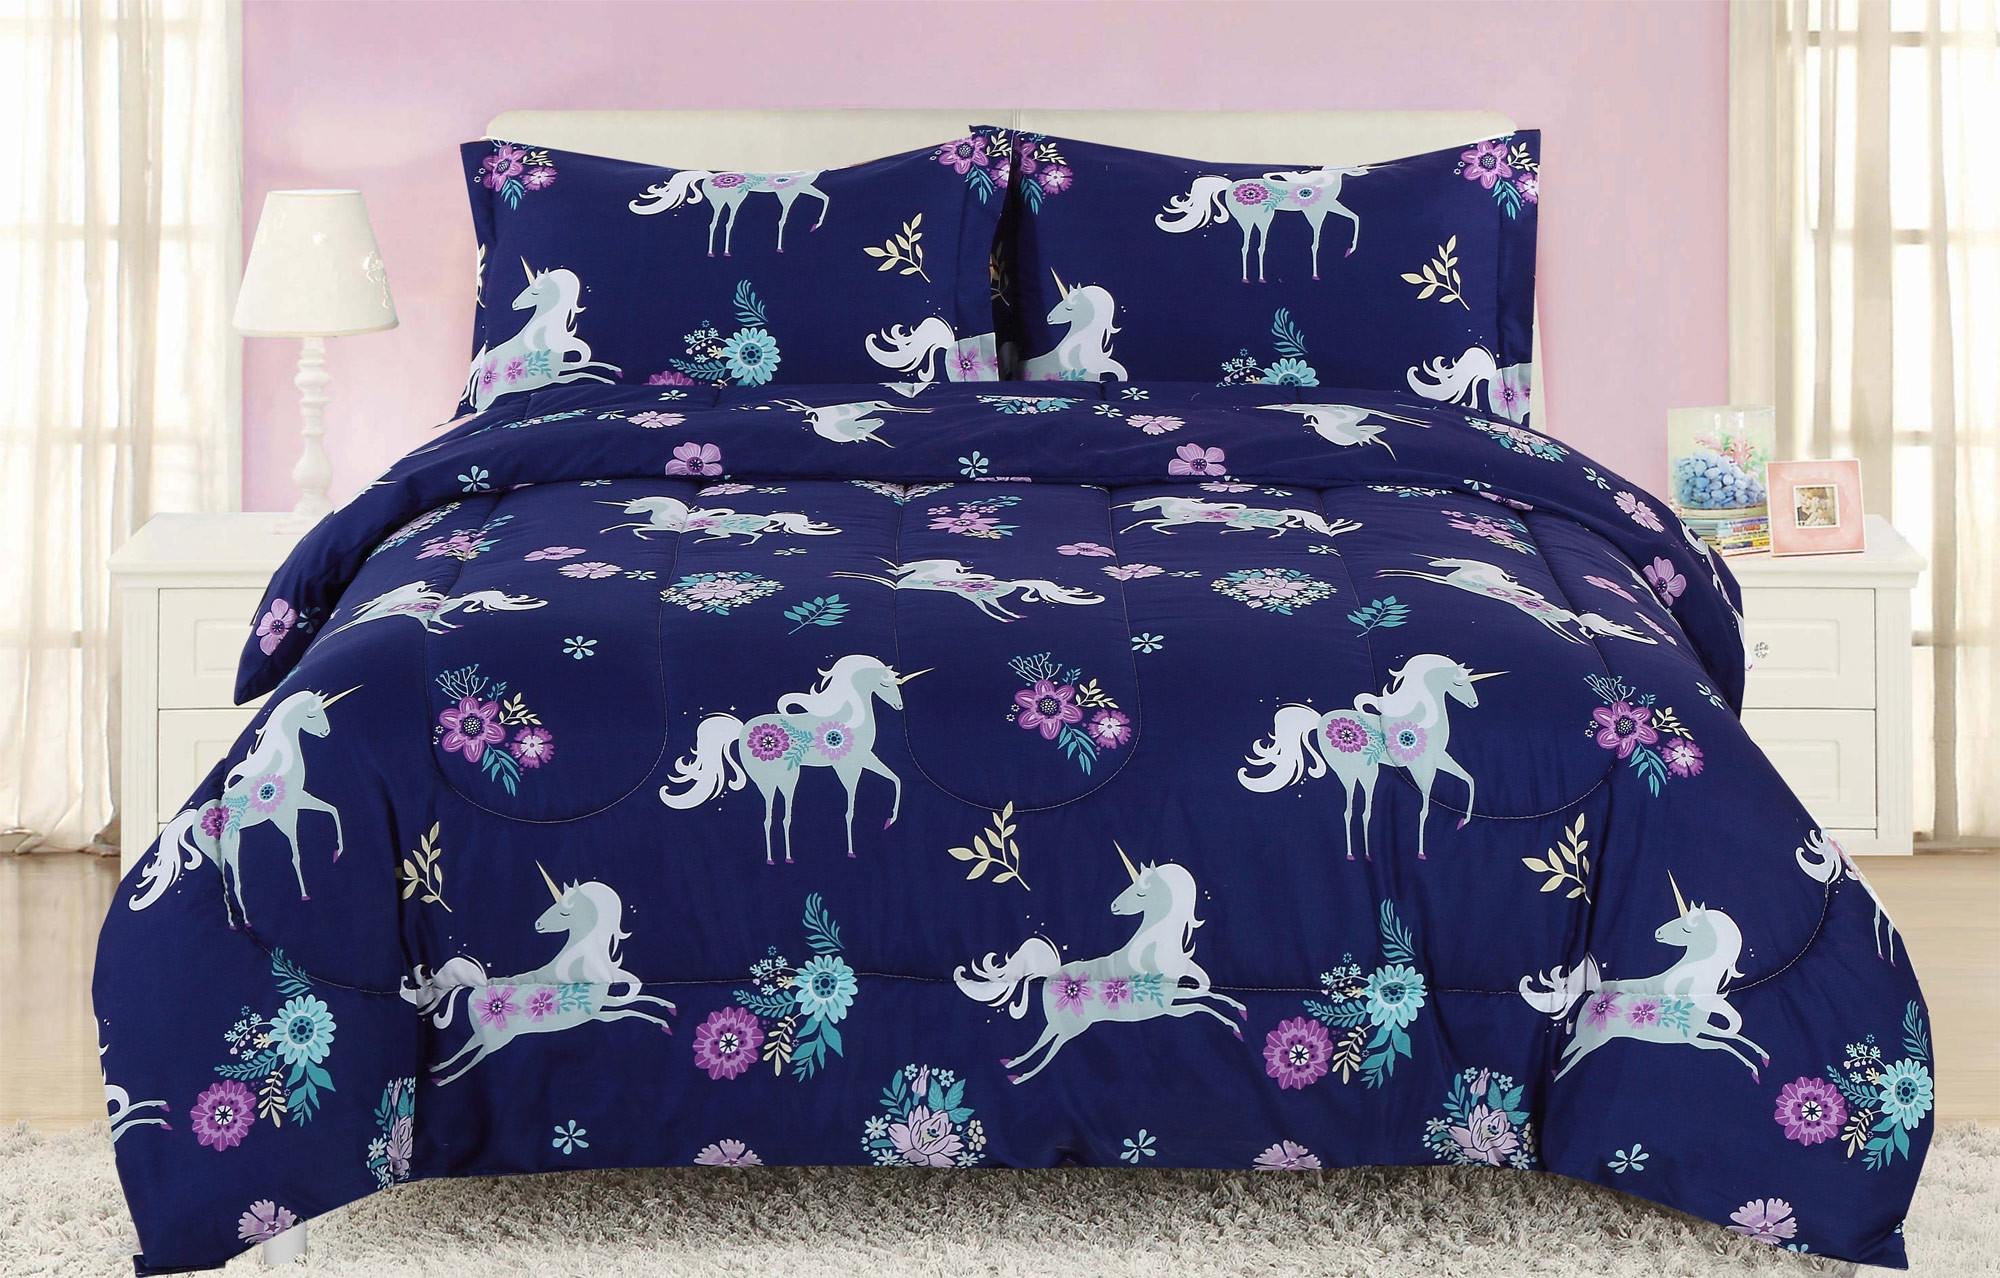 Walmart Girl Bedroom Sets
 Full Queen Girls Unicorn forter Bedding Set Navy Blue